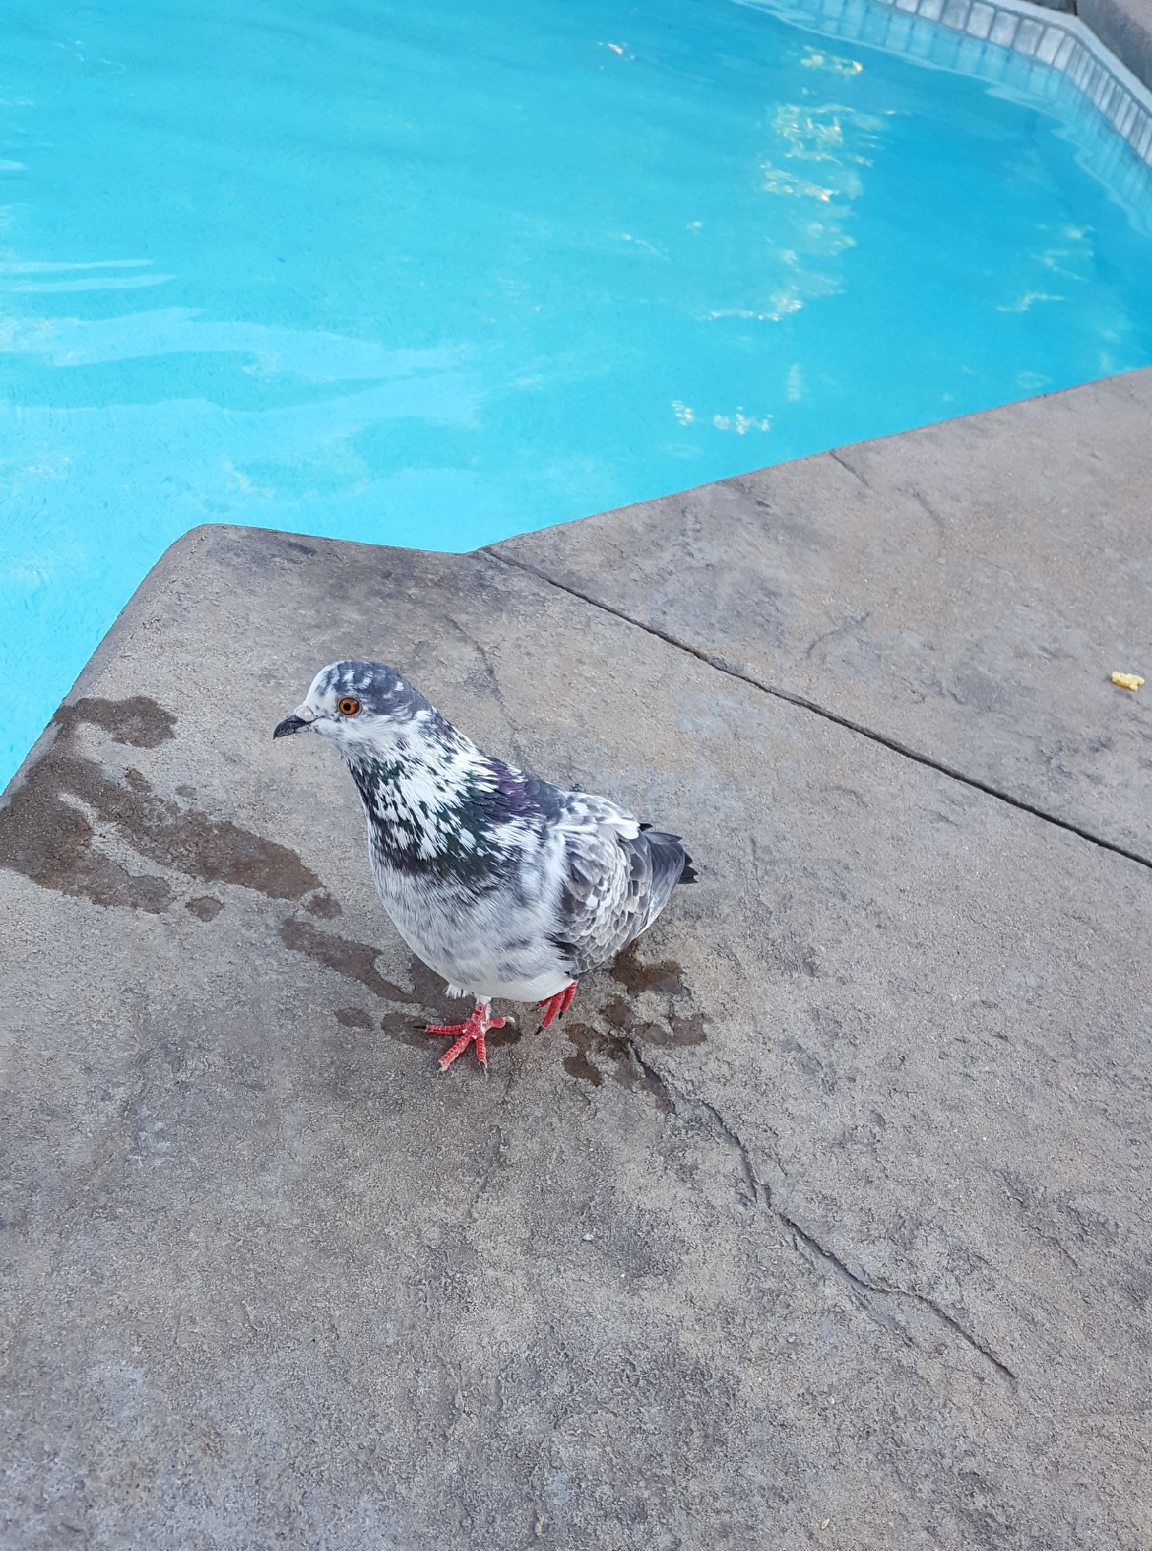 Domestic pigeon seeking help